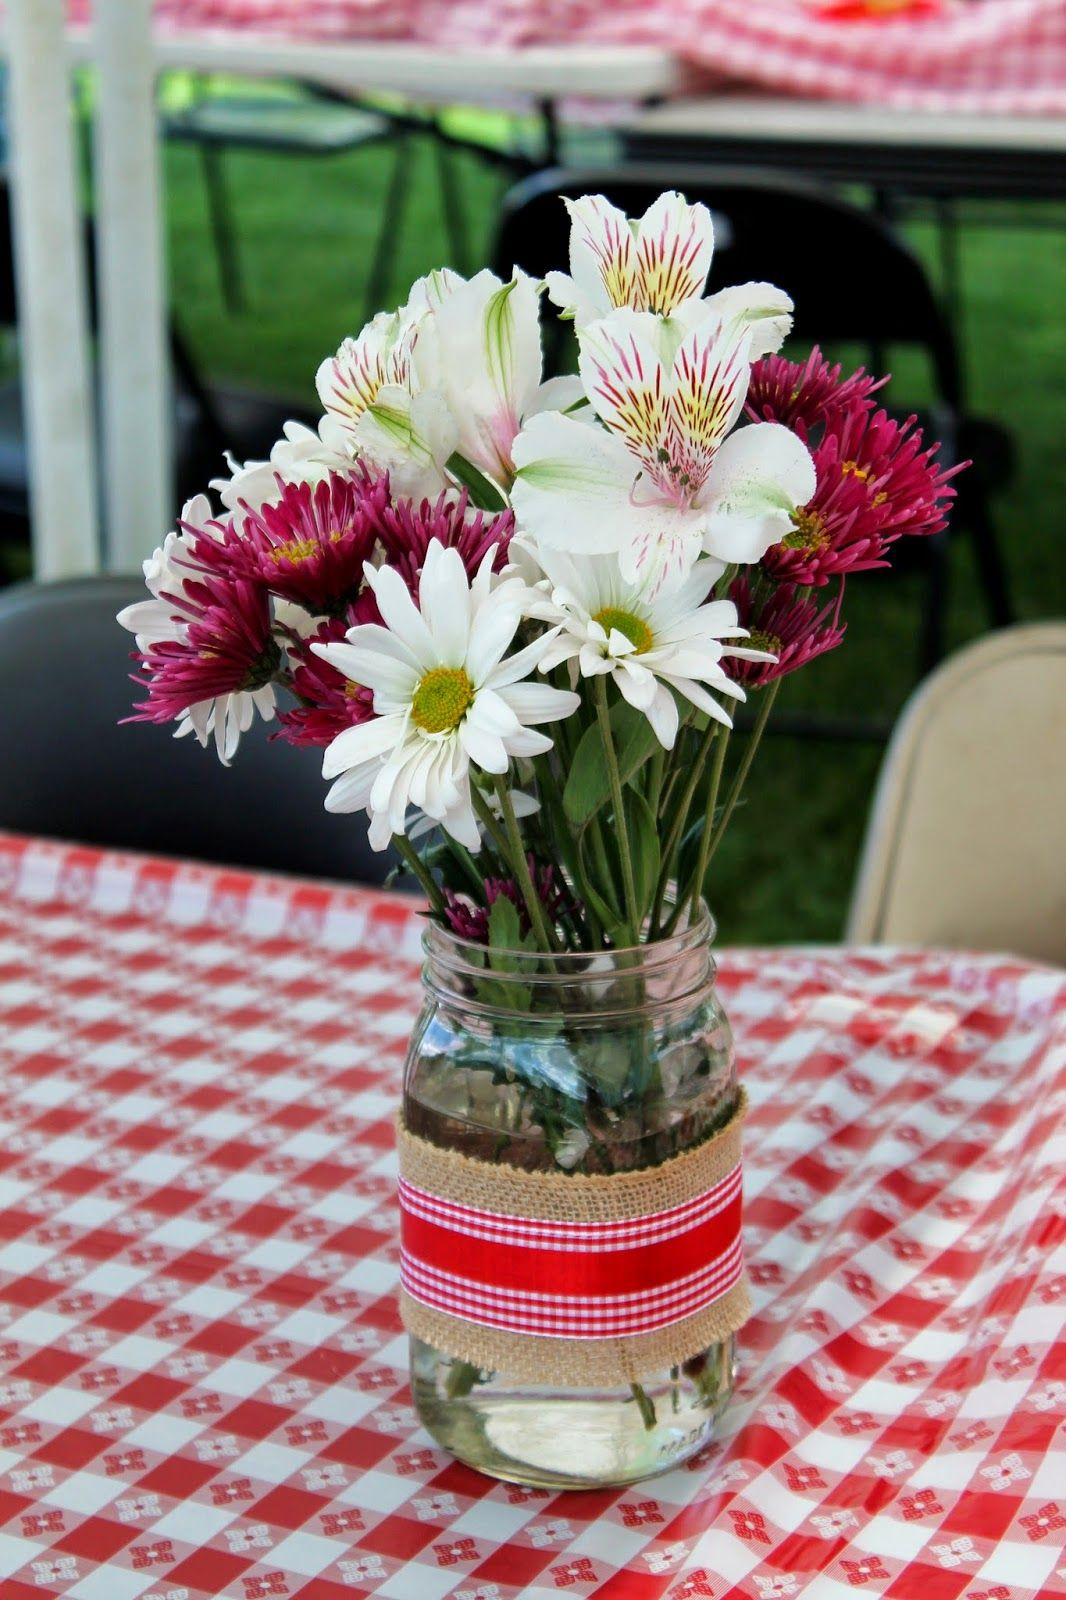 Engagement Party Flower Centerpiece Ideas
 I DO BBQ Flower Centerpiece in Mason Jars Couples